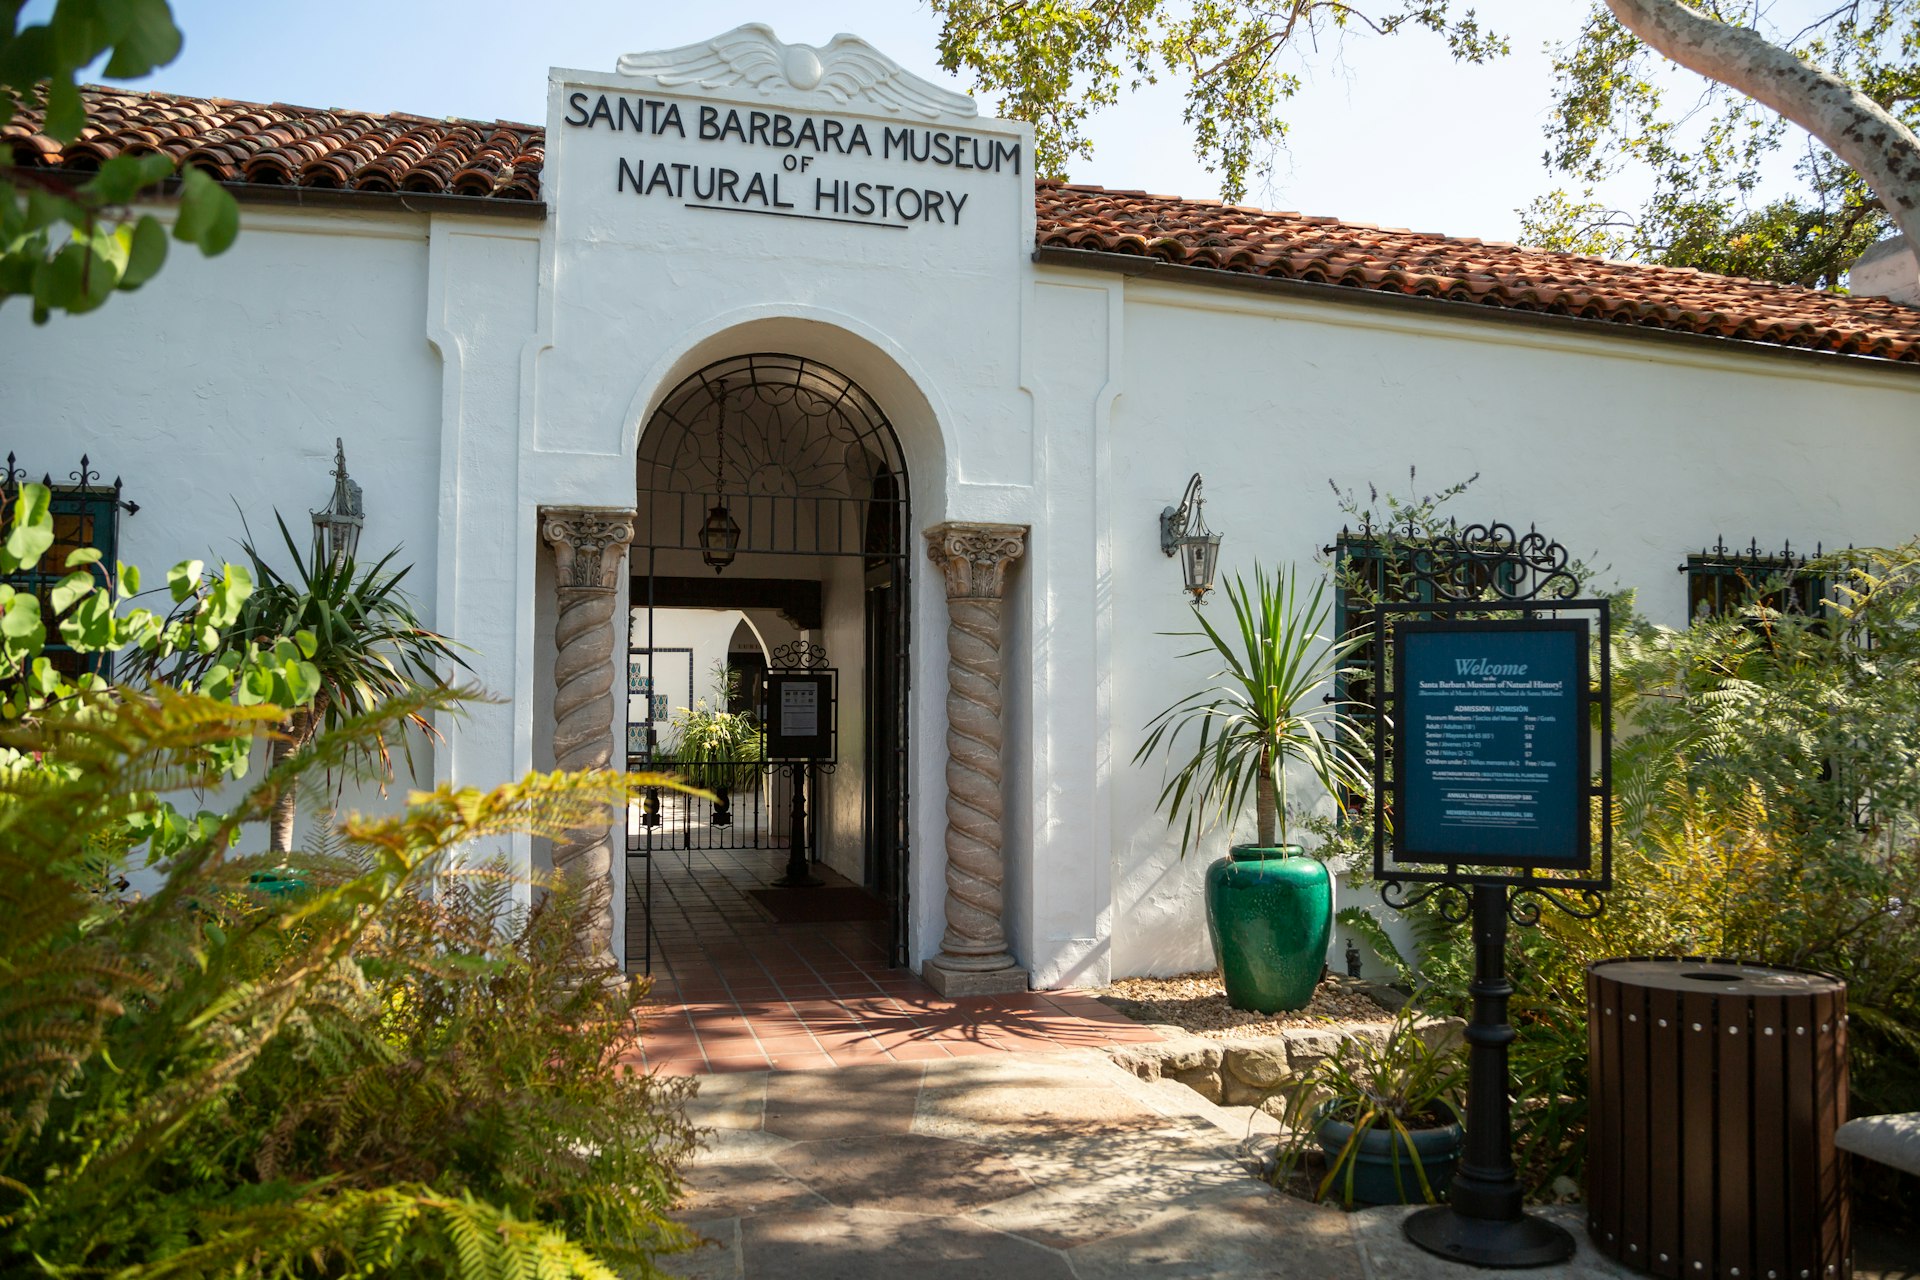 The Spanish-style buildings and plantings at the Santa Barbara Museum of Natural History